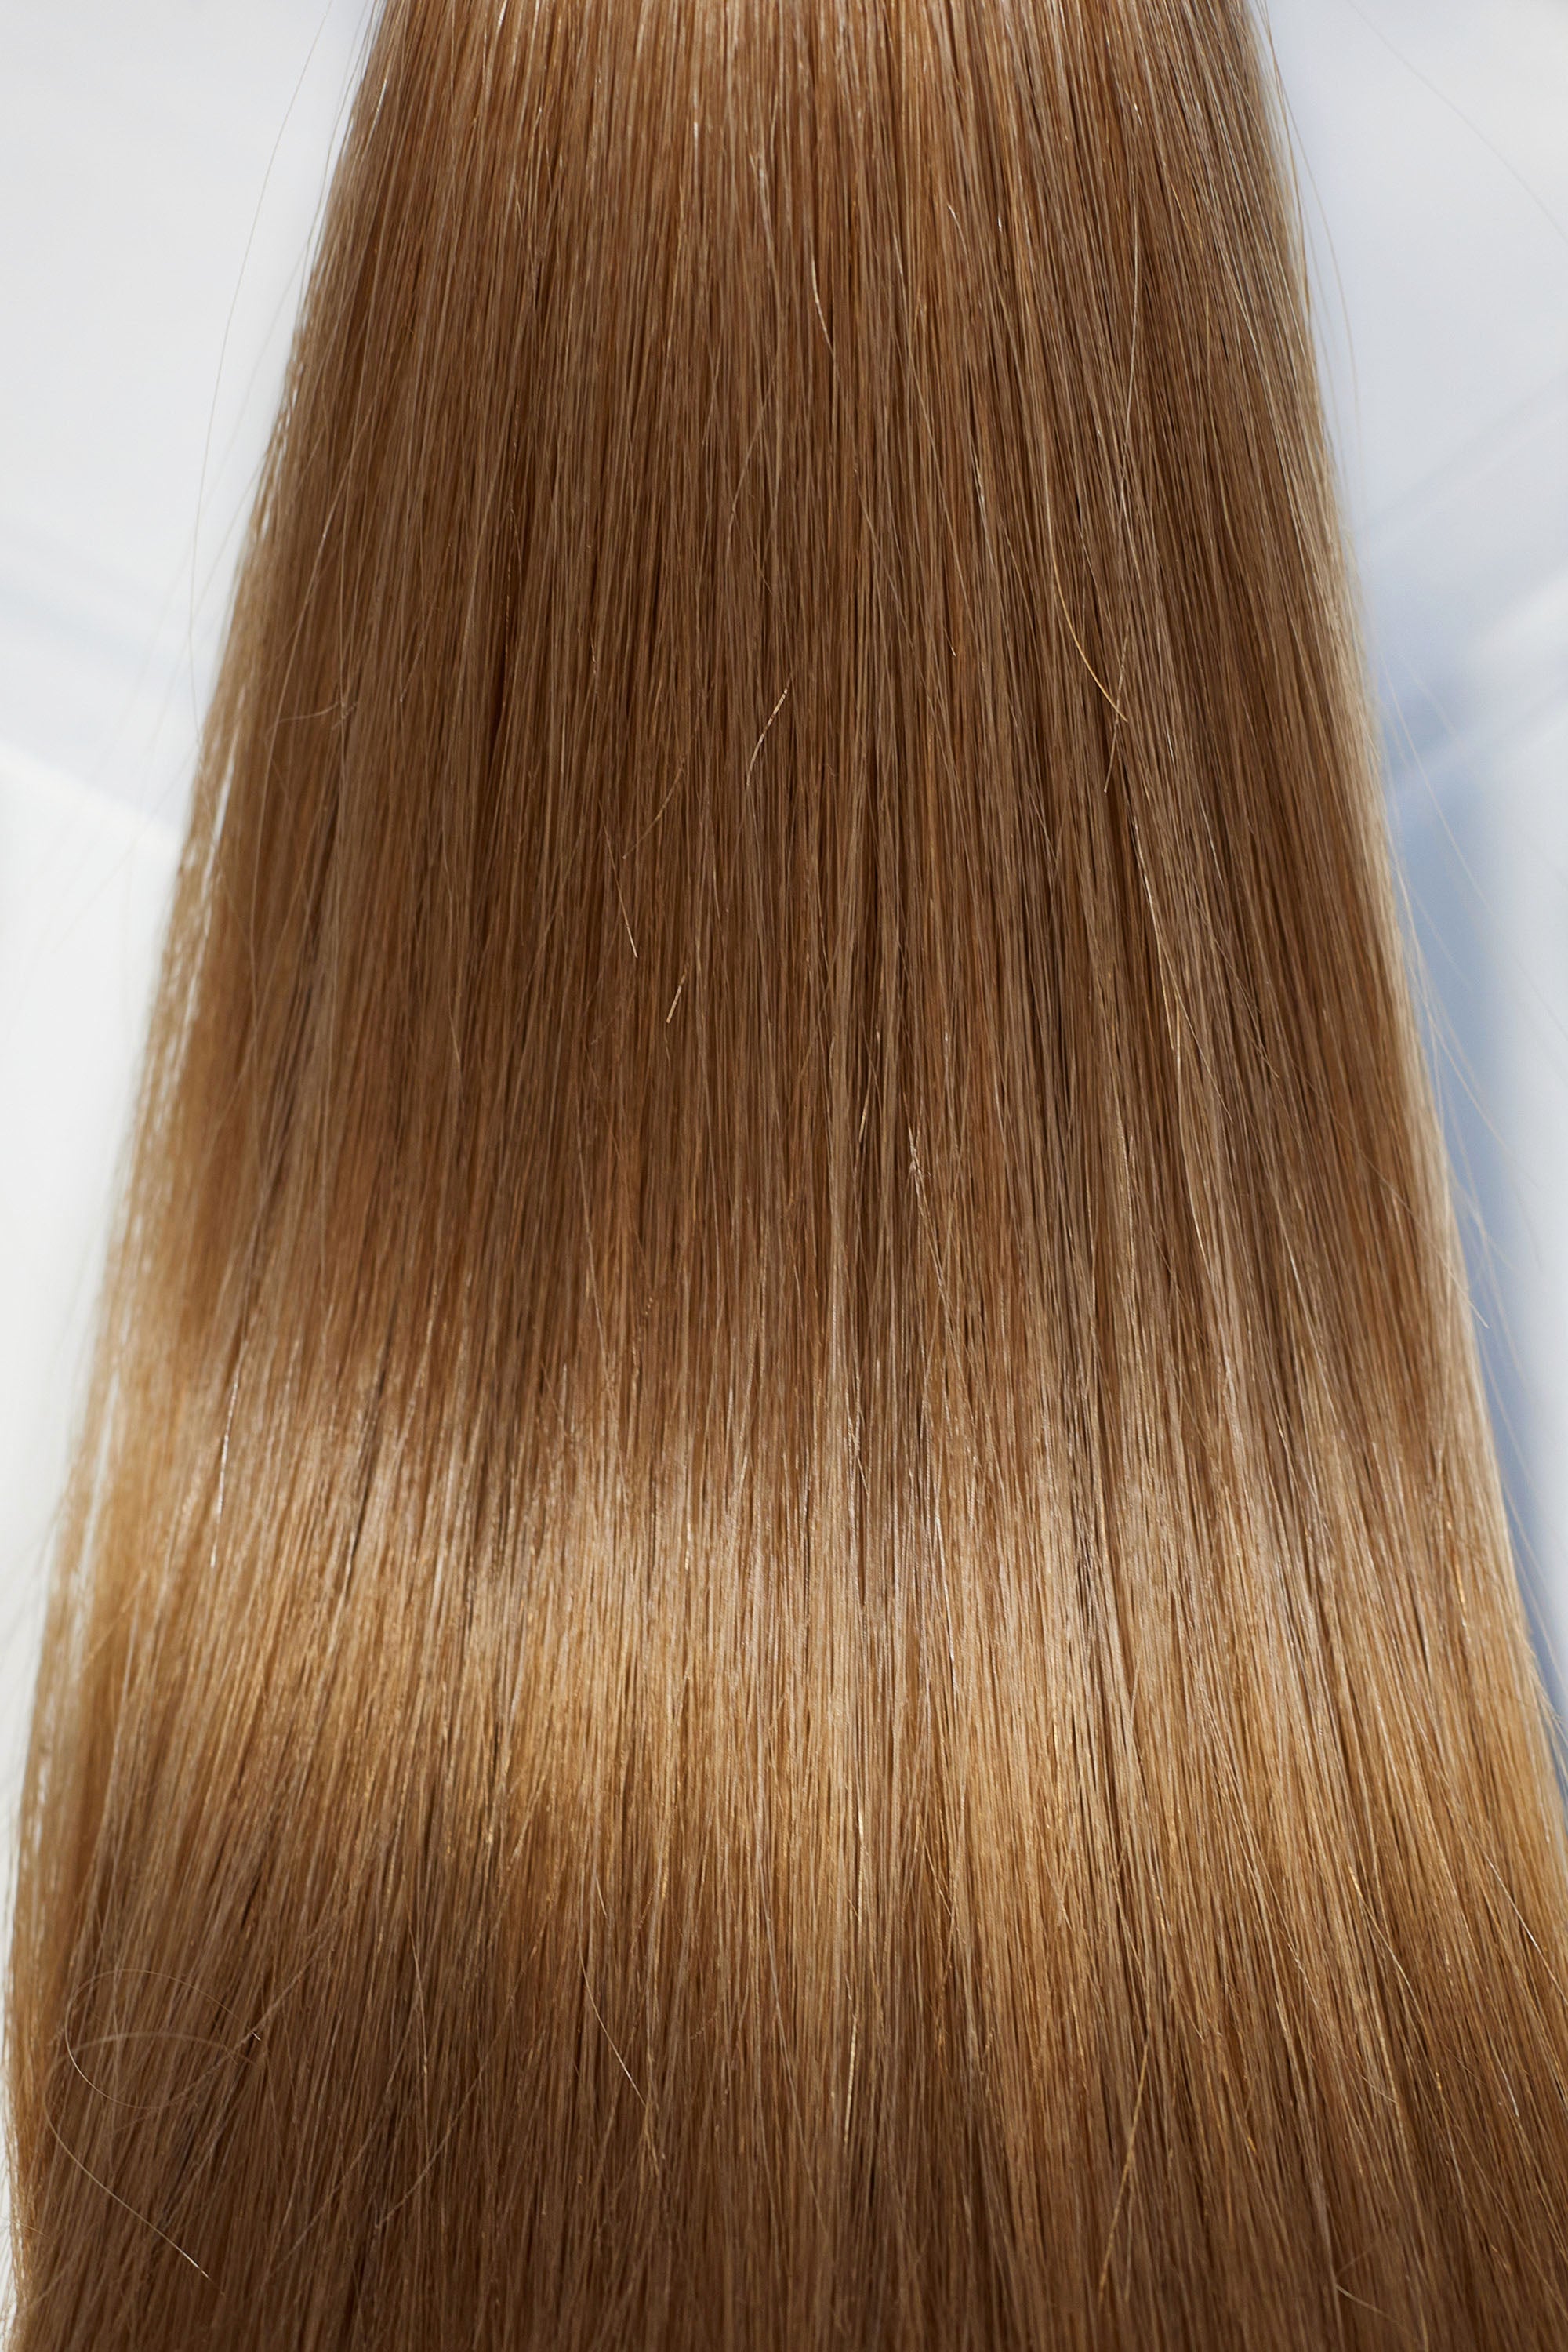 Behair professional Keratin Tip "Premium" 24" (60cm) Natural Straight Caramel Brown #8 - 25g (Micro - 0.5g each pcs) hair extensions